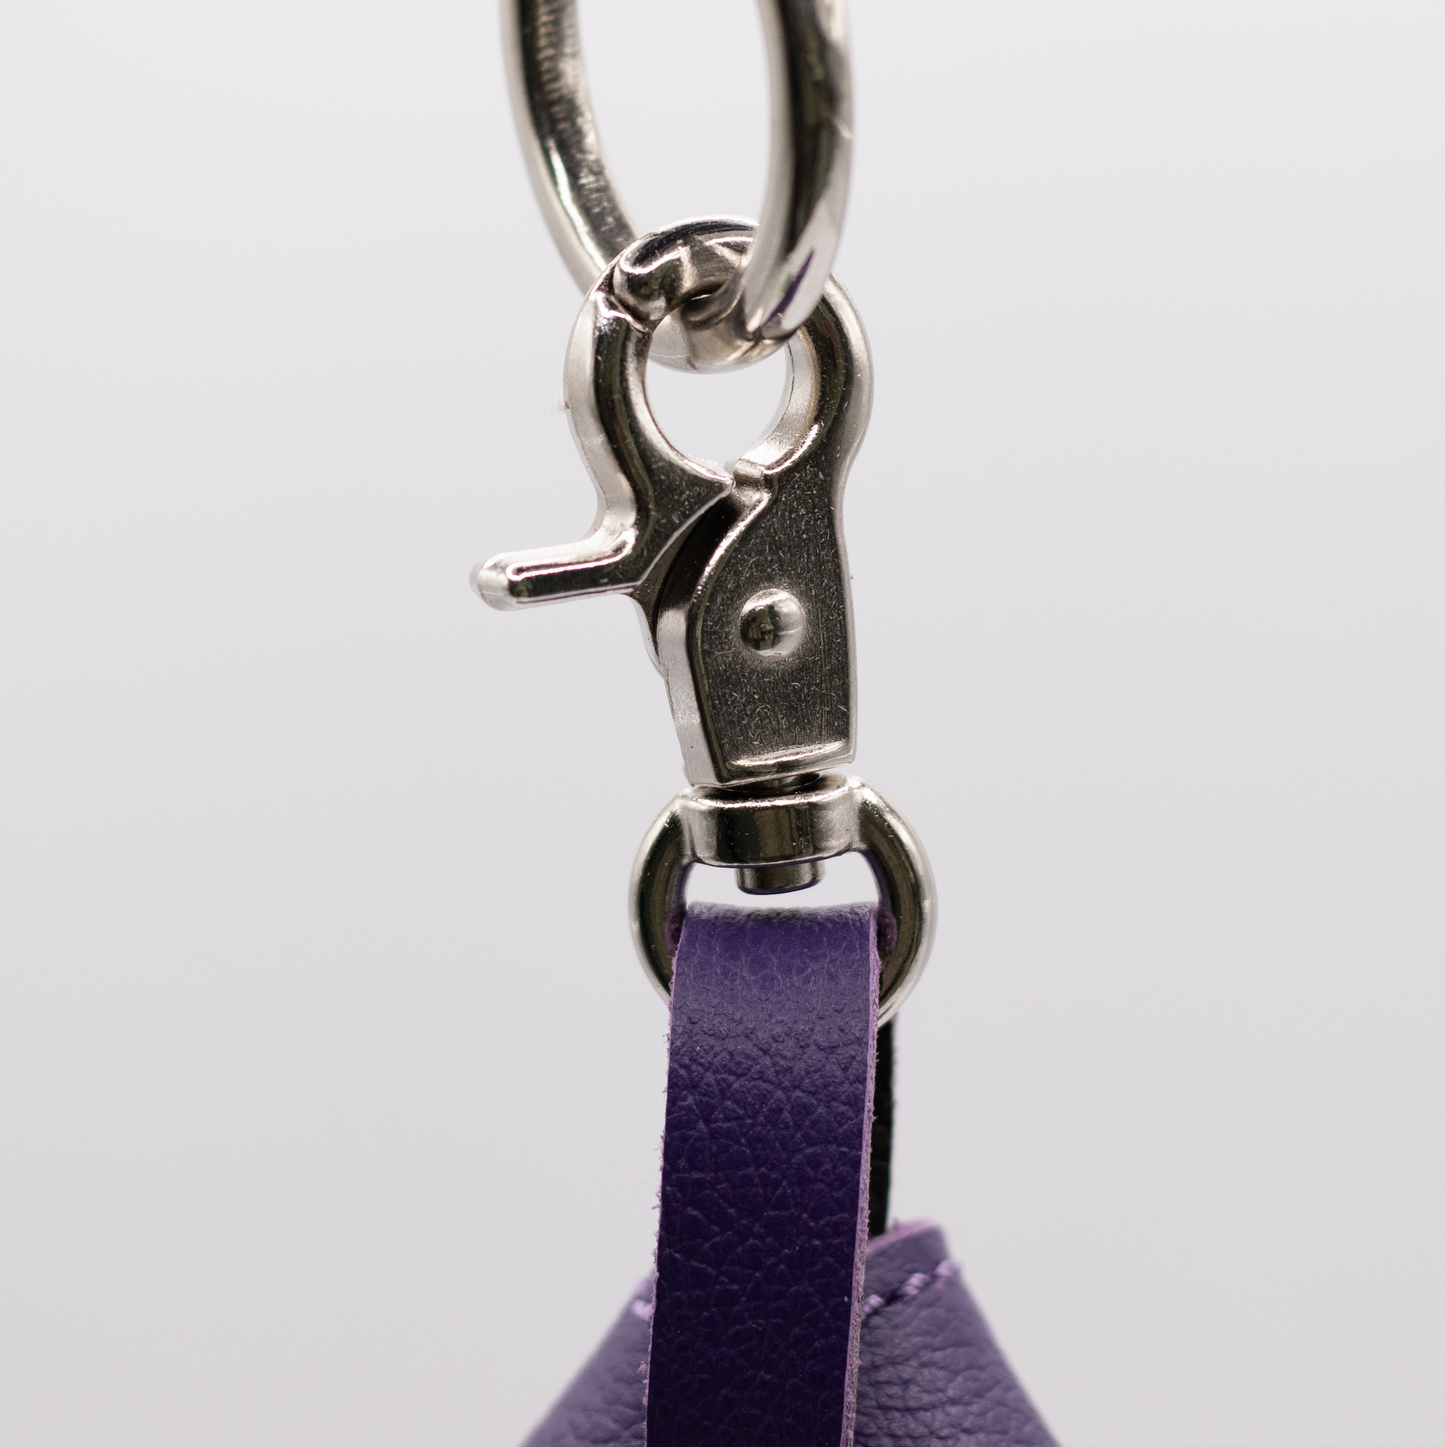 D&H PooSh - Soft Leather Poo Bag Dispenser Purple